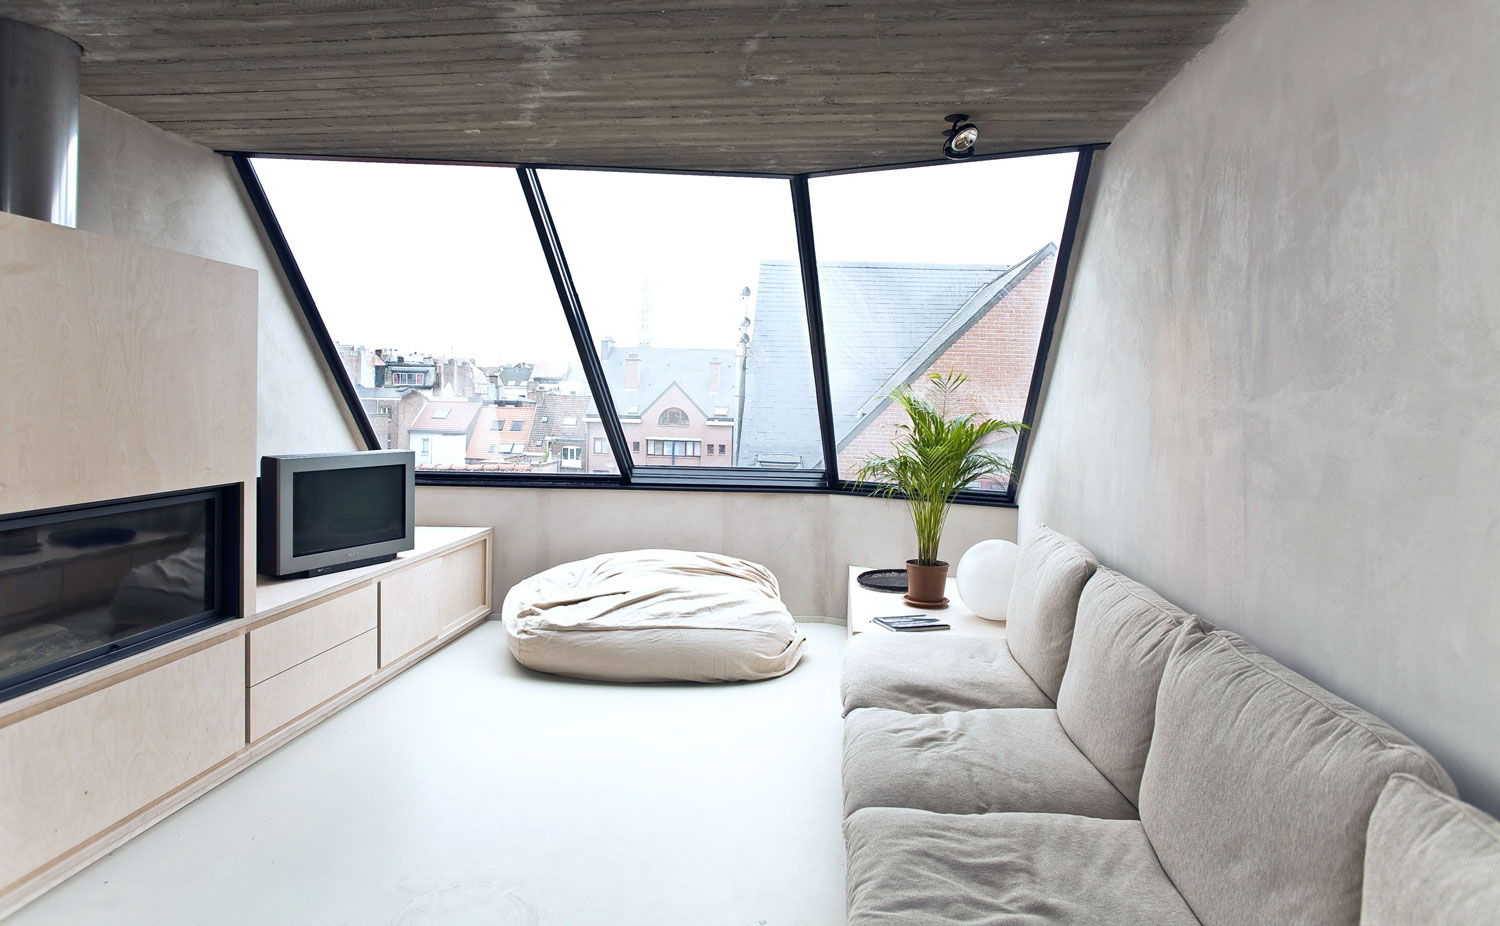 40 Attic Bedroom and Attic Lounge  Design  Ideas  